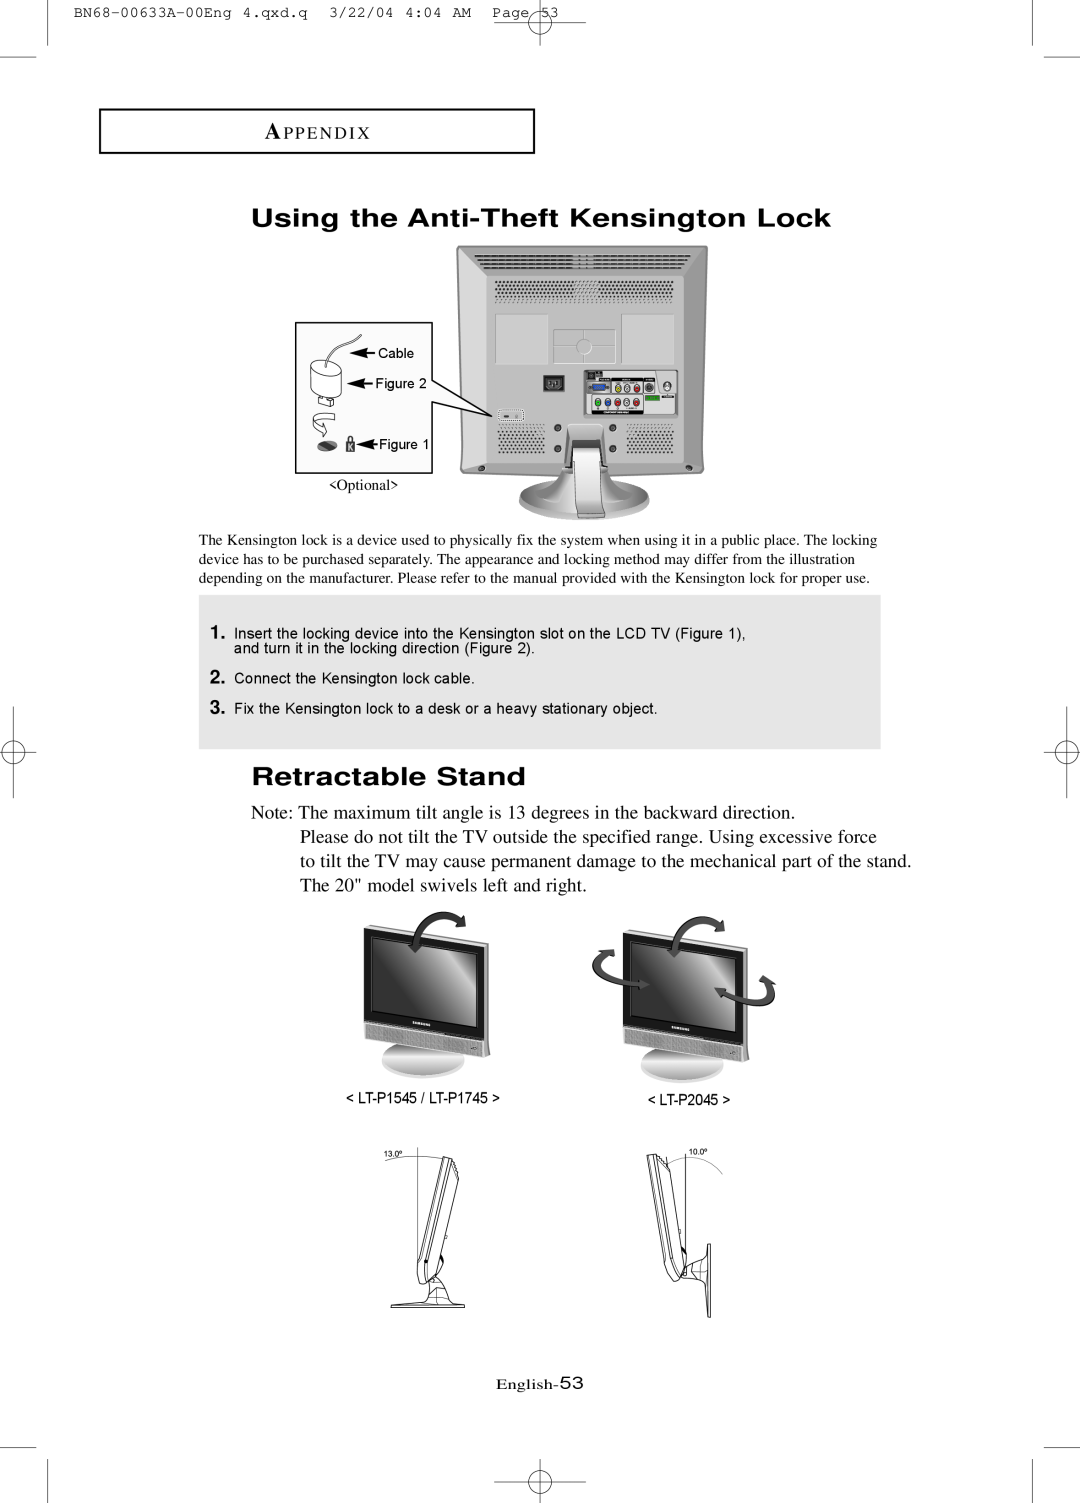 Samsung LT-P 2045, LT-P 1745, LT-P 1545 manual Using the Anti-Theft Kensington Lock, Retractable Stand 